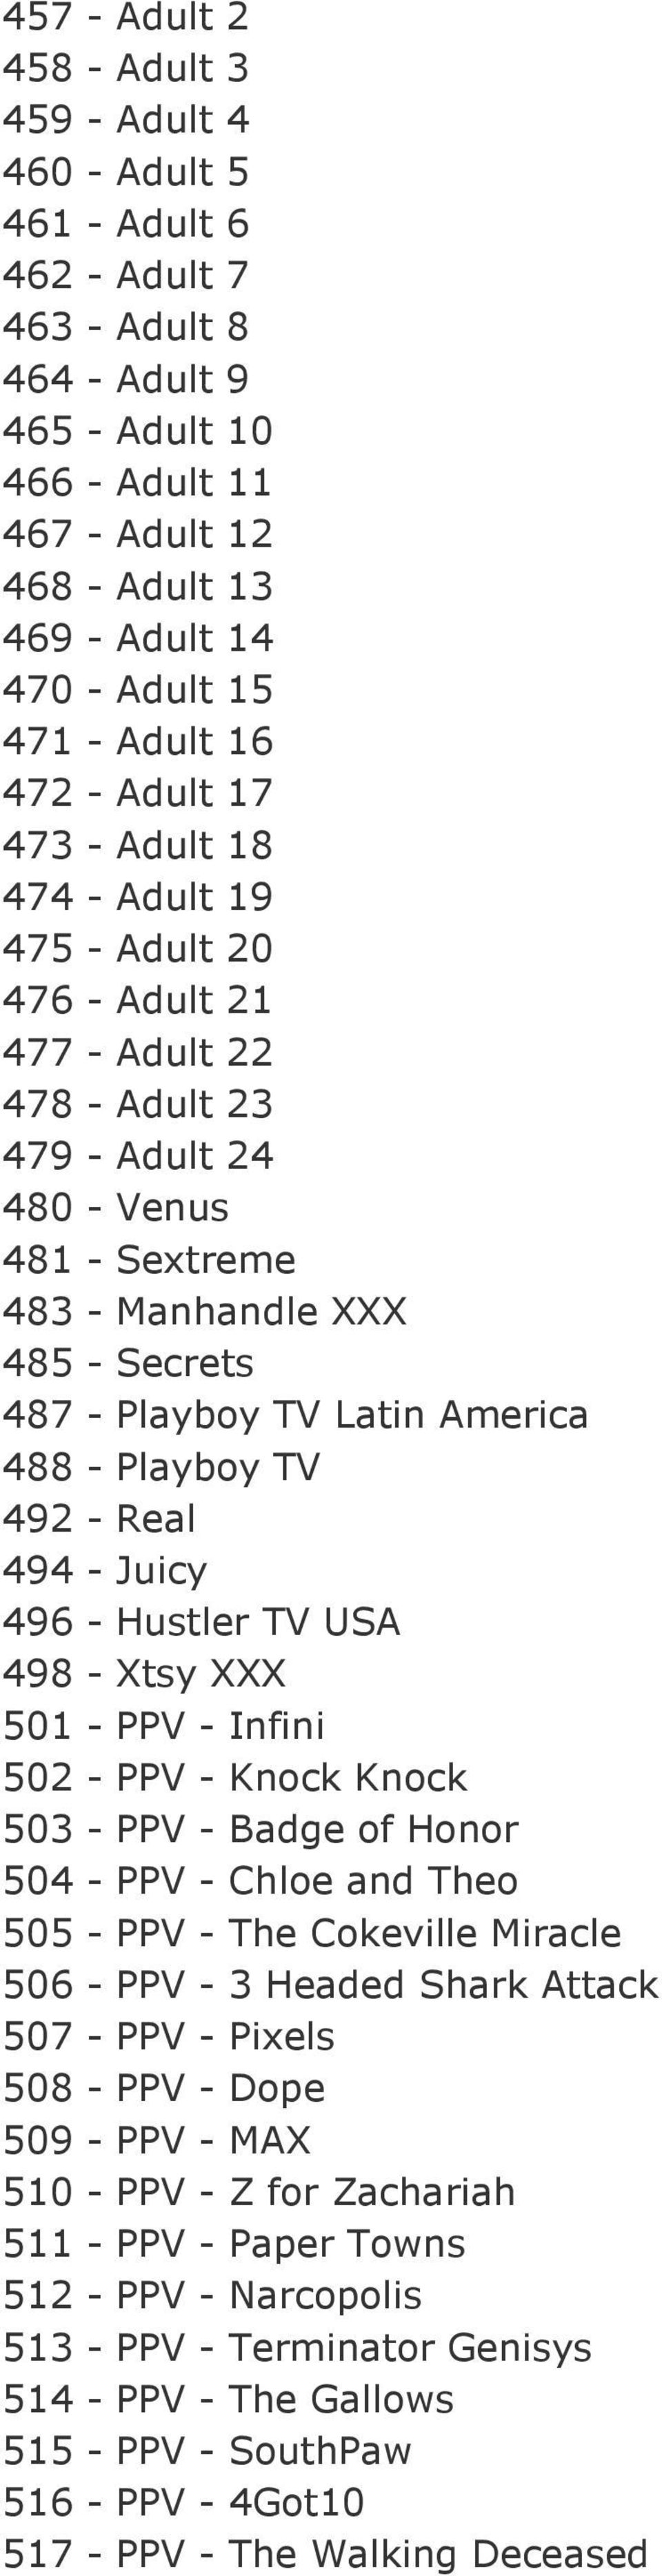 487 - Playboy TV Latin America 488 - Playboy TV 492 - Real 494 - Juicy 496 - Hustler TV USA 498 - Xtsy XXX 501 - PPV - Infini 502 - PPV - Knock Knock 503 - PPV - Badge of Honor 504 - PPV - Chloe and